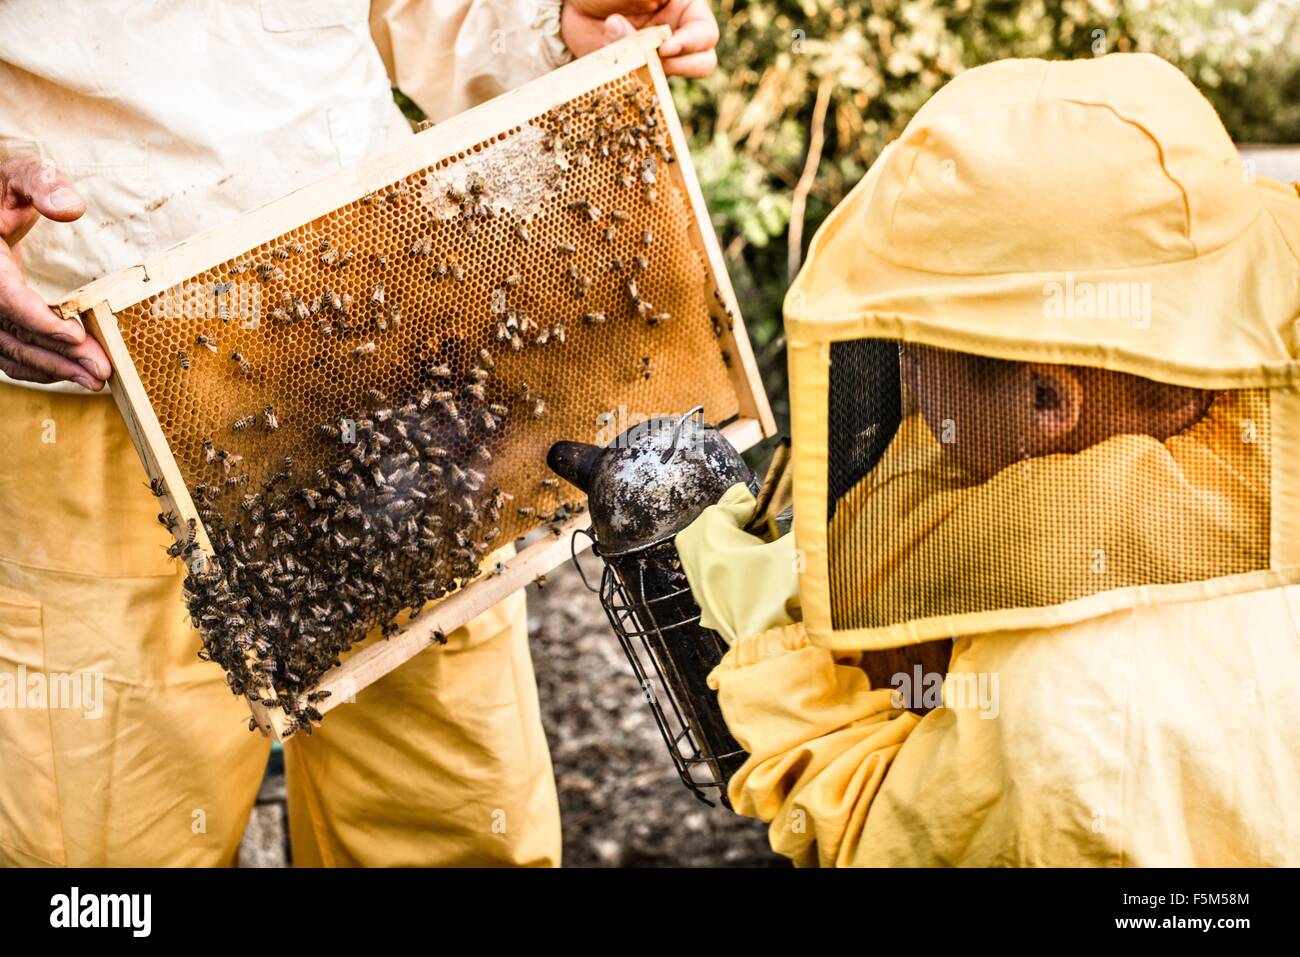 Young boy in beekeeper dress, using bee smoker Stock Photo